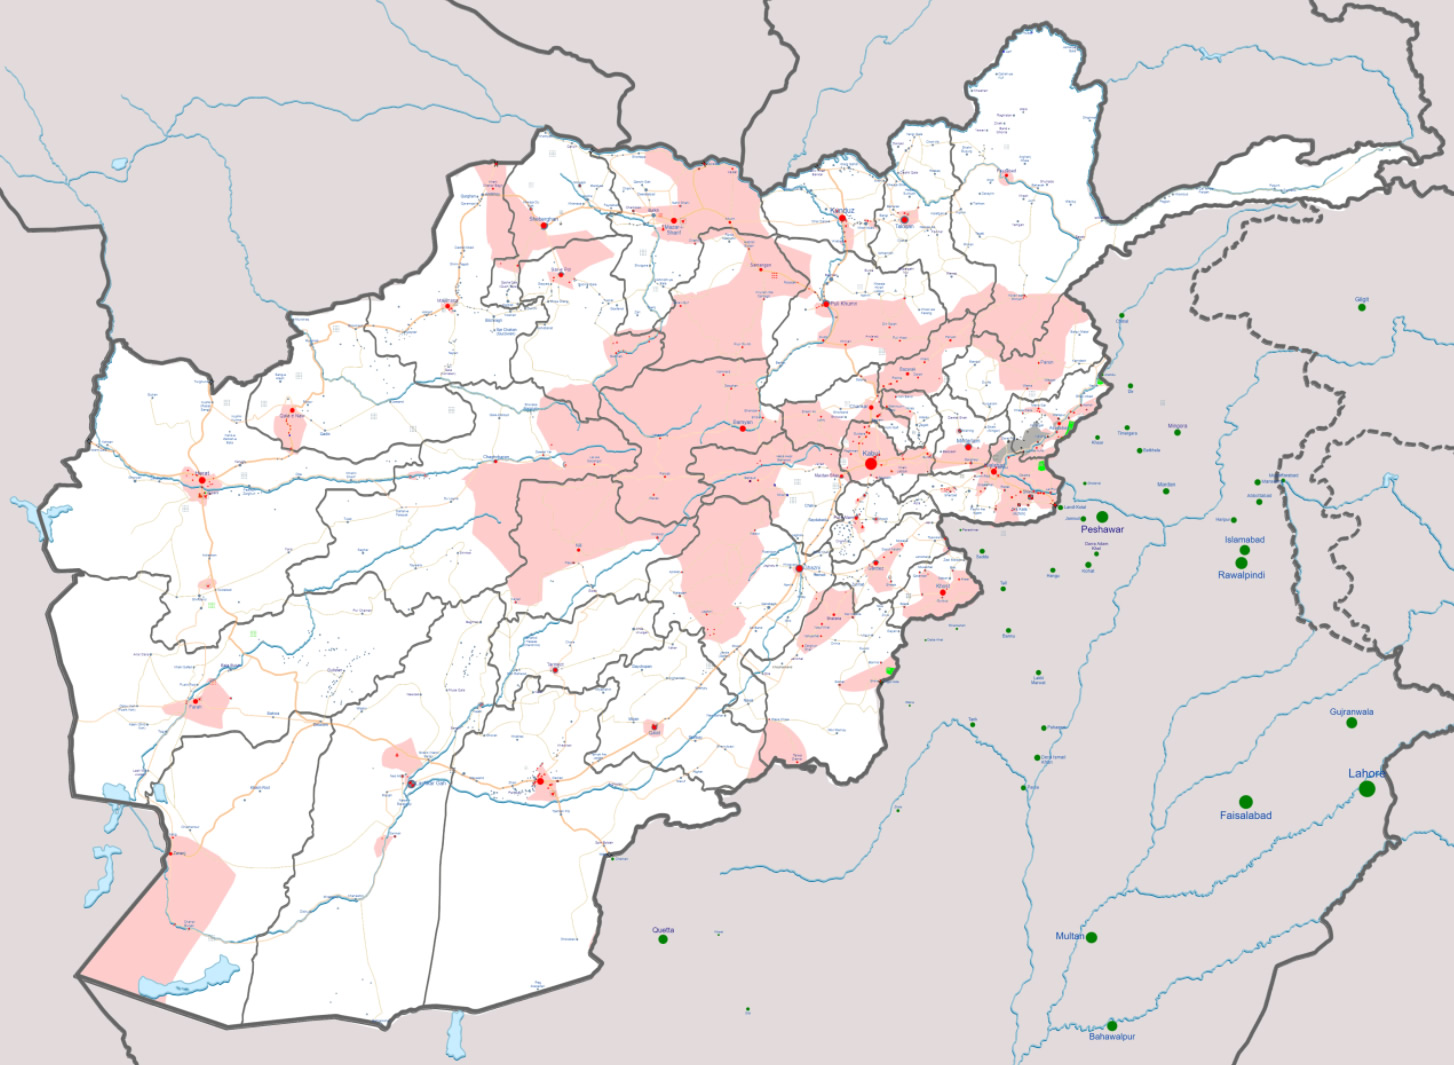 Taliban insurgency in Afghanistan Map